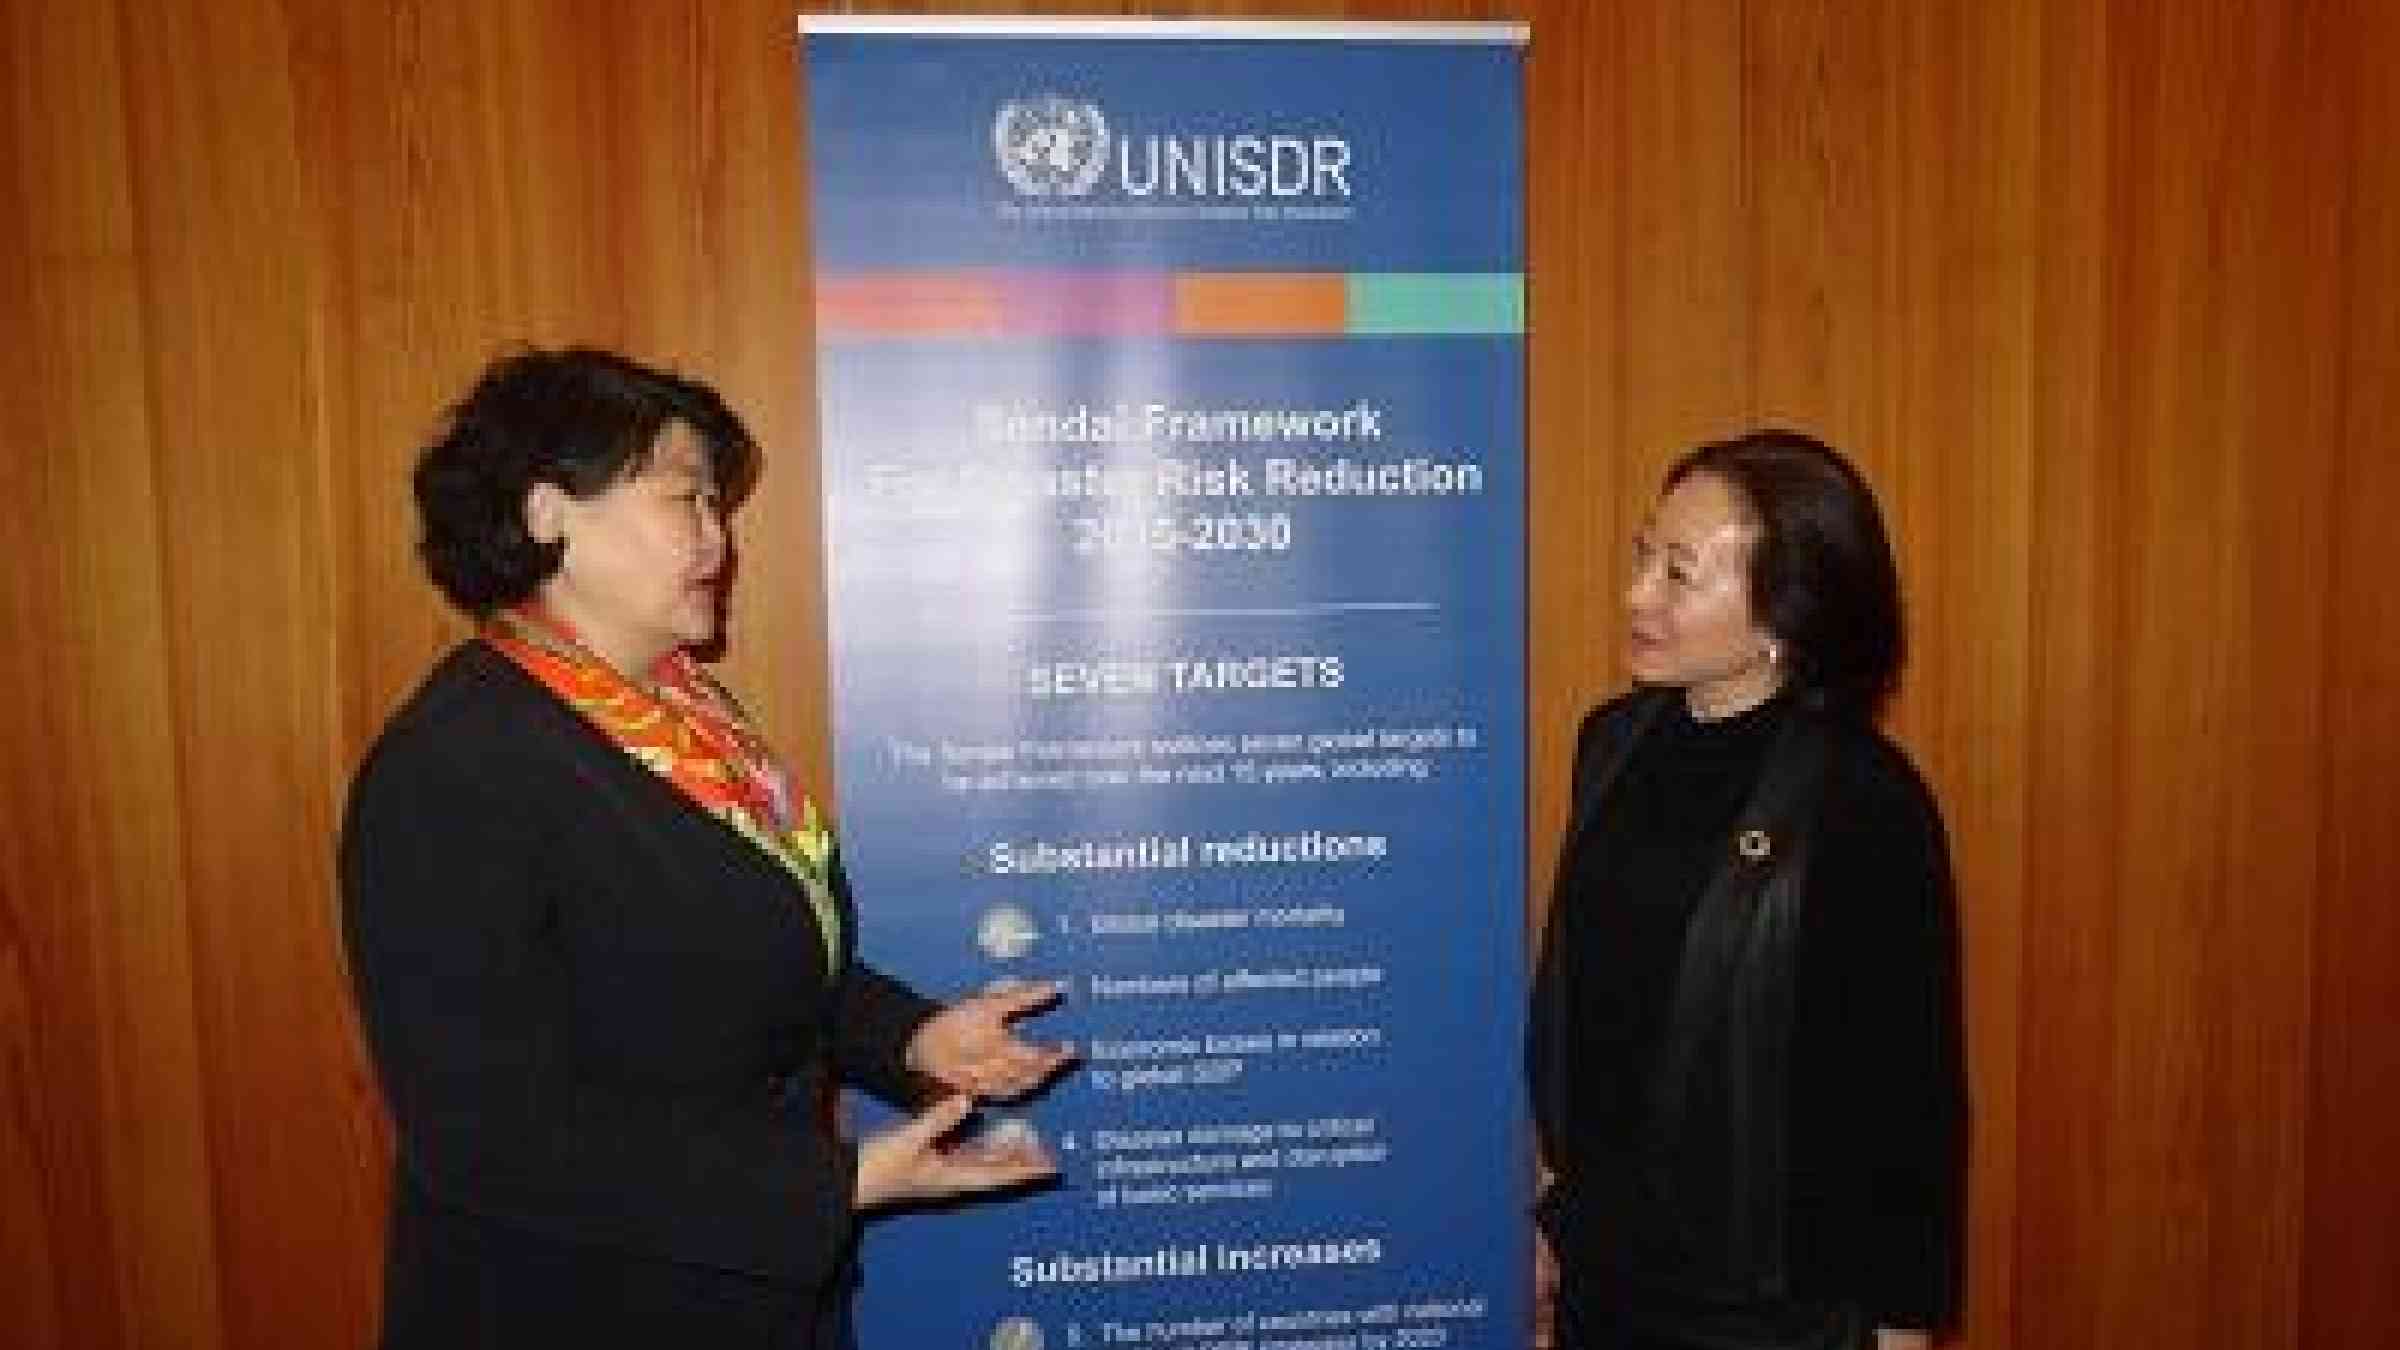 (from left) Sayanaa Lkhagvasuren of the Government of Mongolia met with UNISDR head, Mami Mizutori, during talks this week in Geneva on Sendai Framework implementation